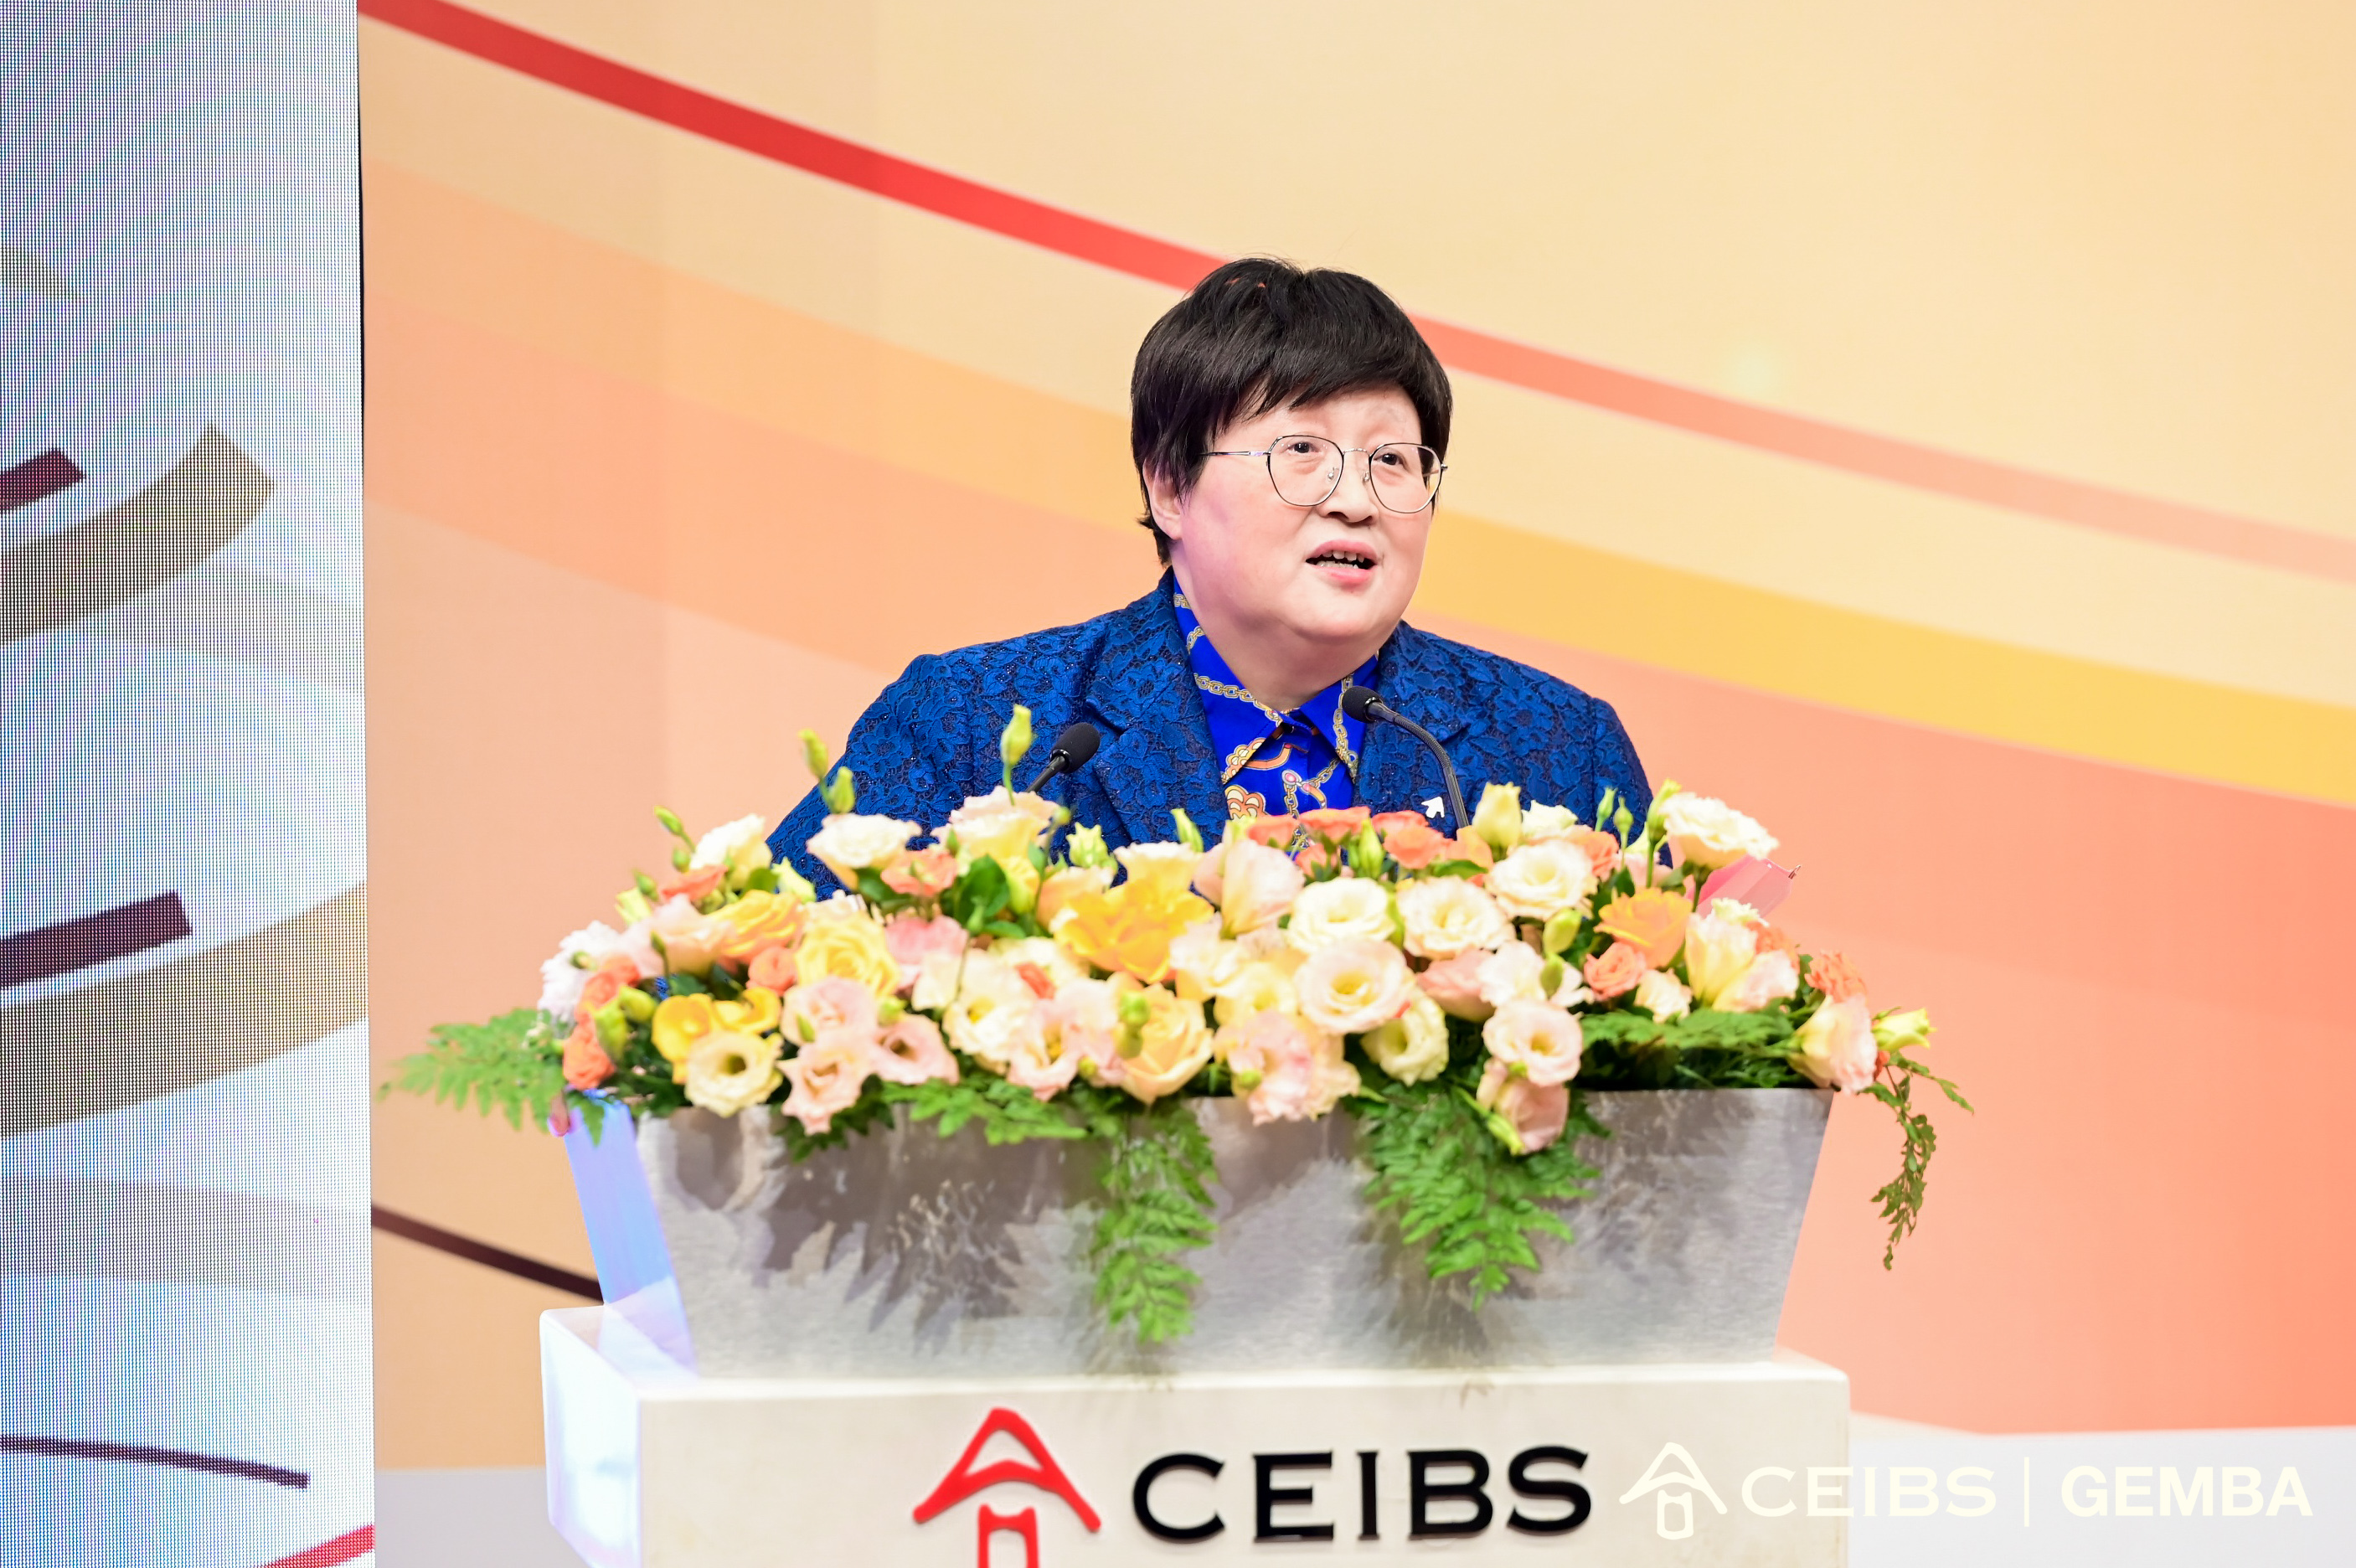 CEIBS President Wang Hong